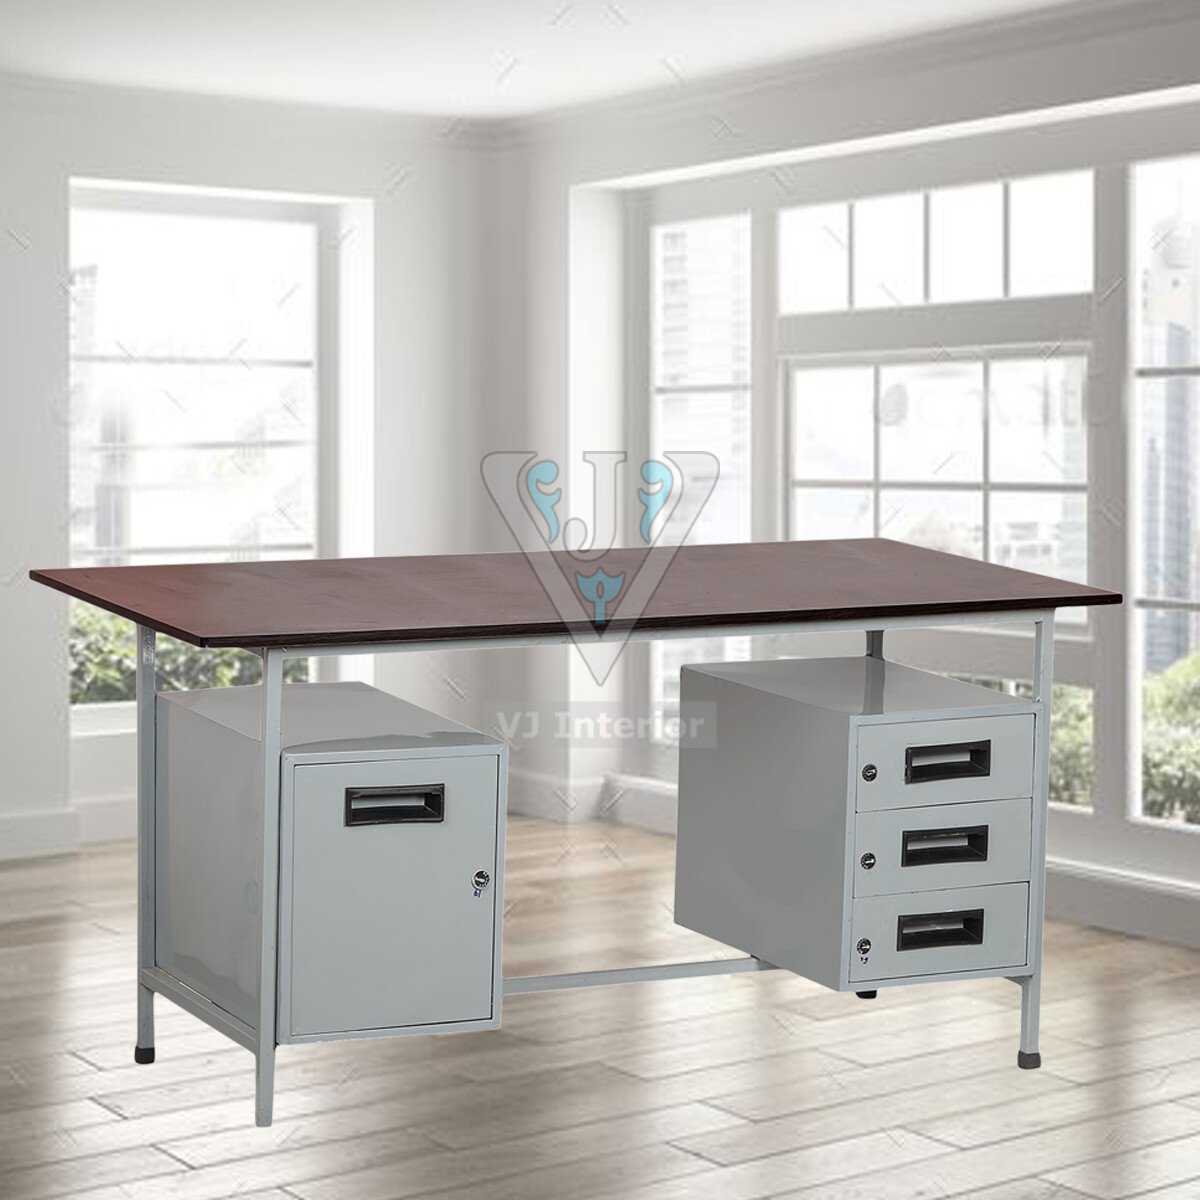 VJ-1108-Steel Office Table (6X4) - VJ Interior